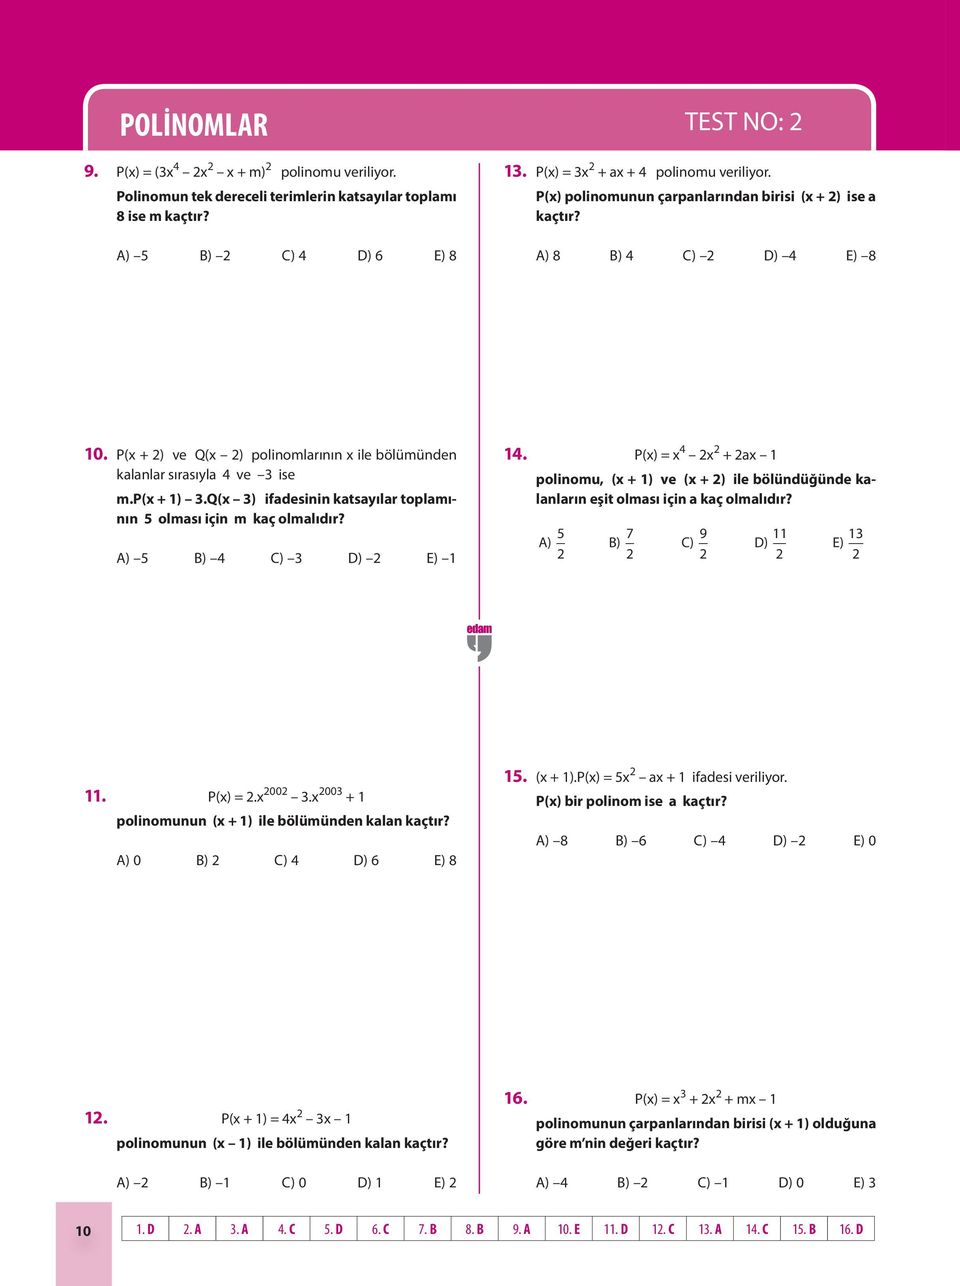 Q(x 3) ifadesinin katsayılar toplamının 5 olması için m kaç olmalıdır? A) 5 B) 4 C) 3 D) E) 1 14.